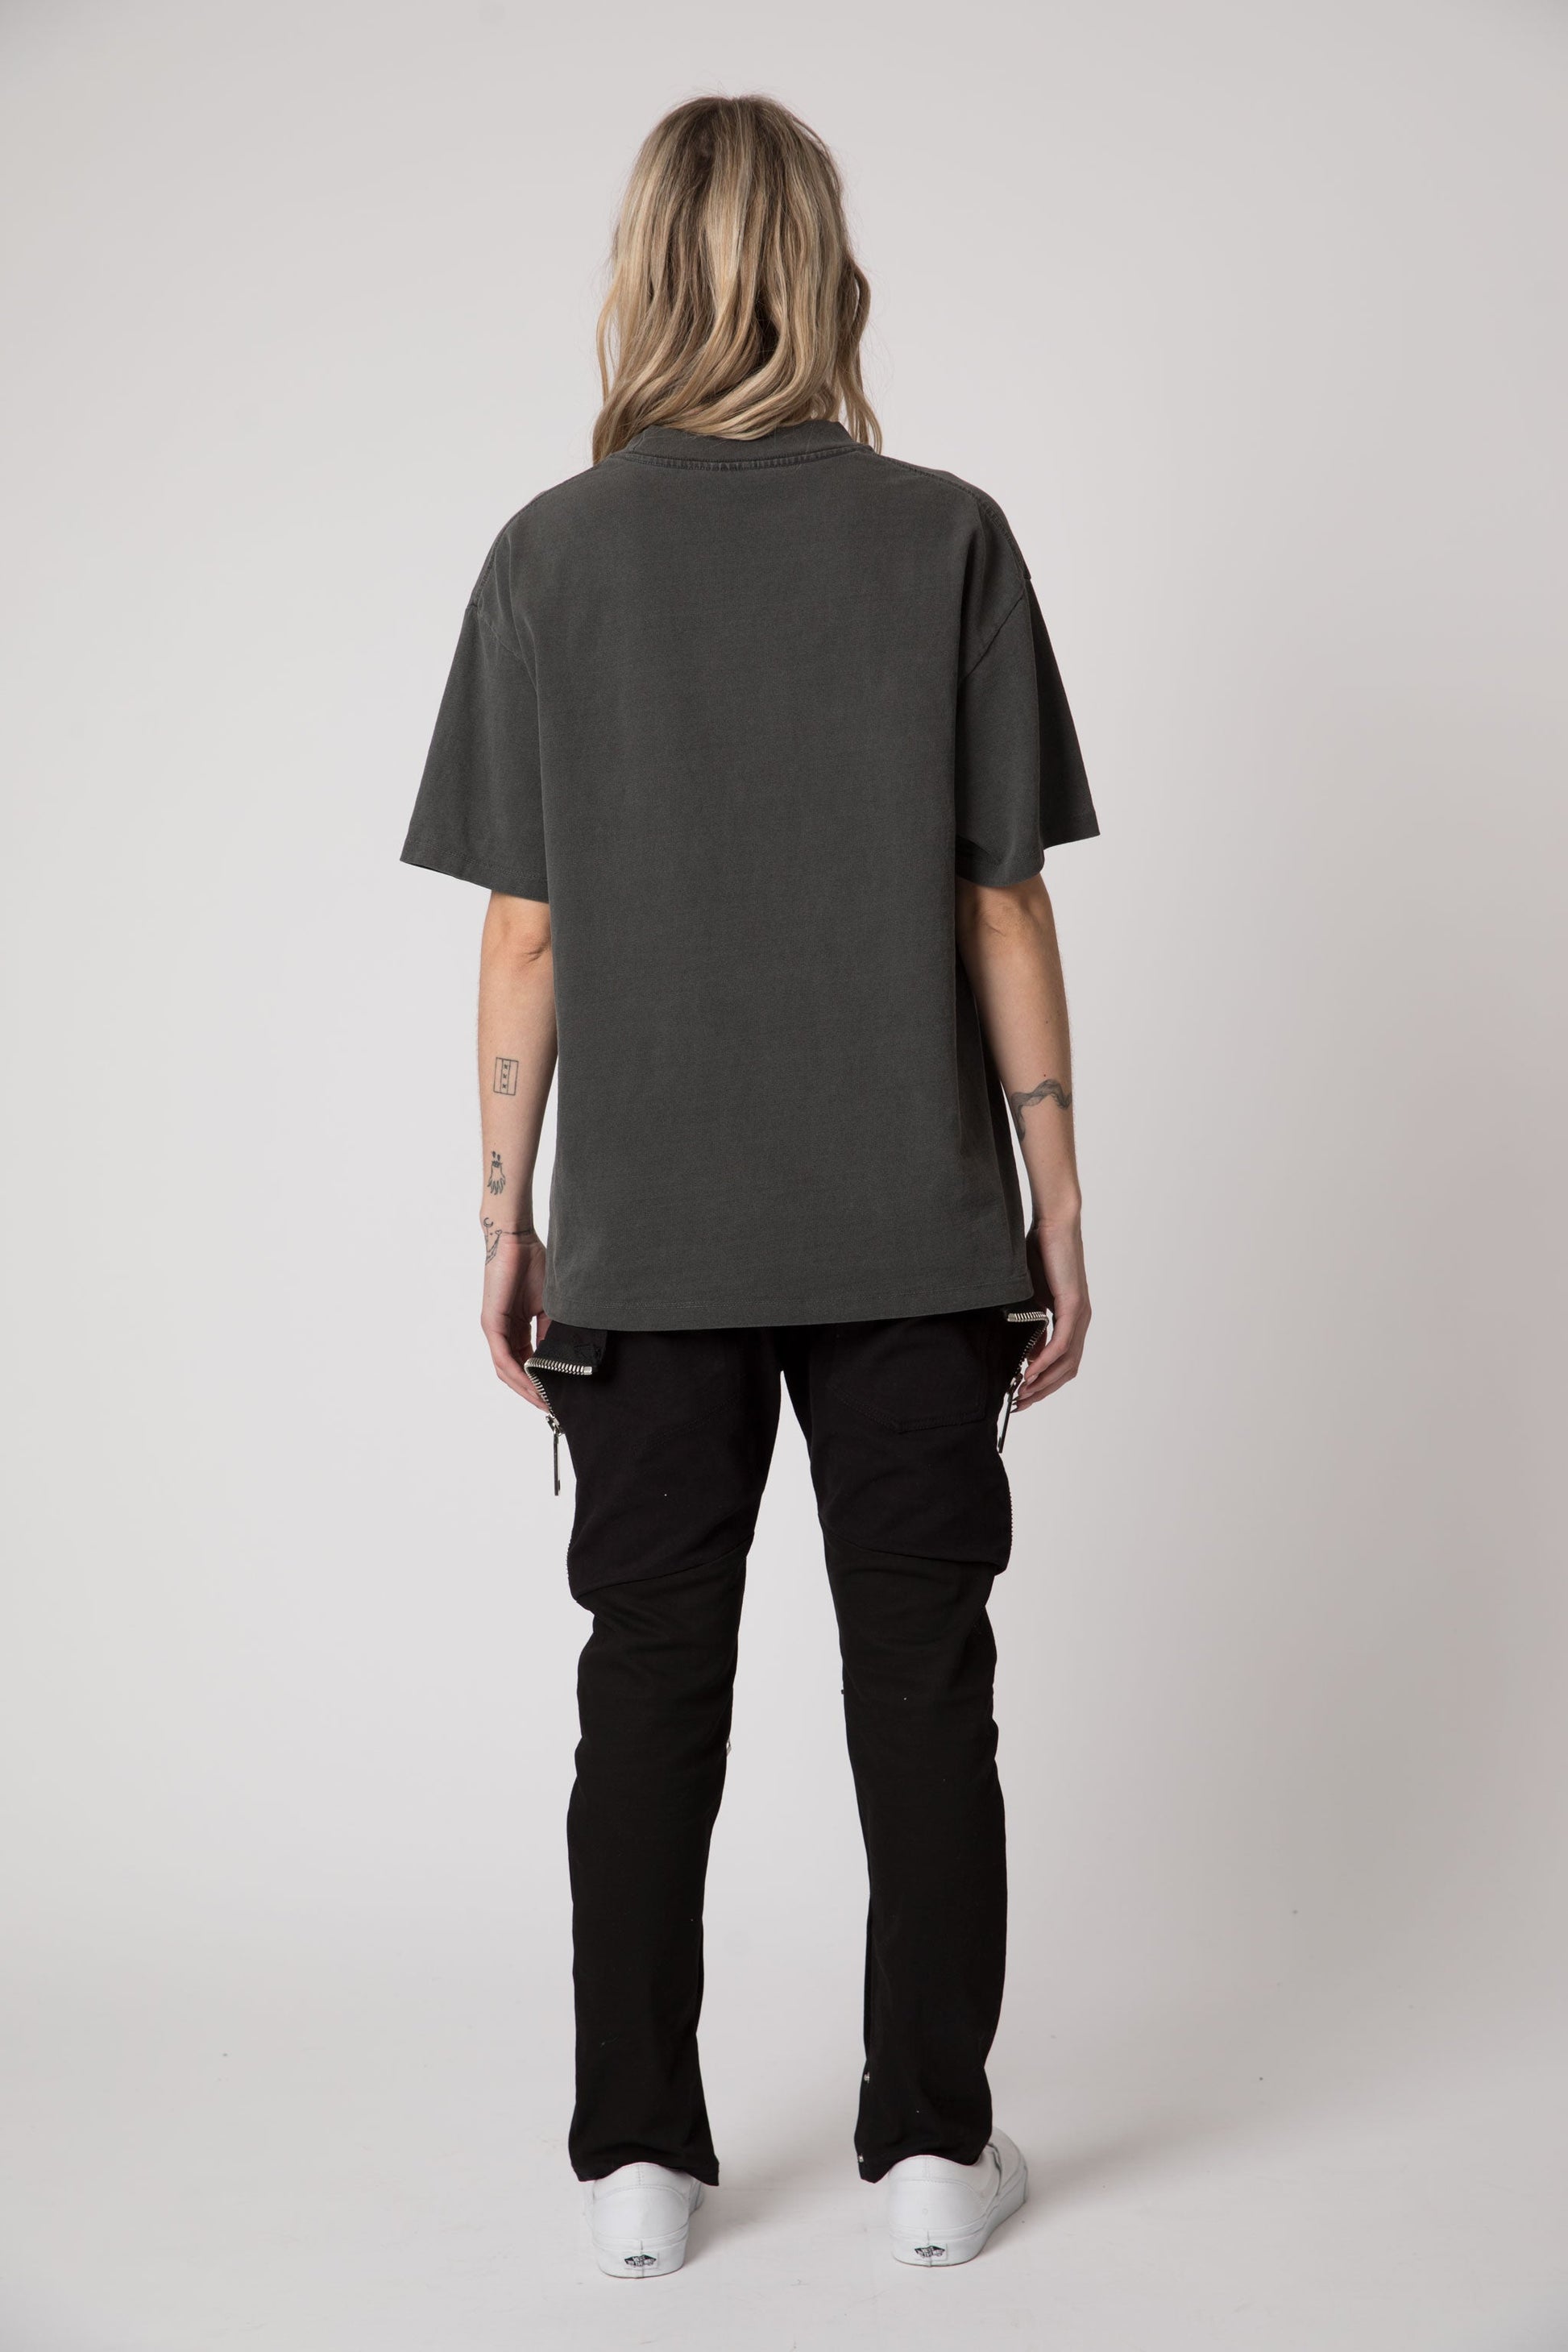 Sixelar Vintage Charcoal t-shirt blank v4.0 back view female model